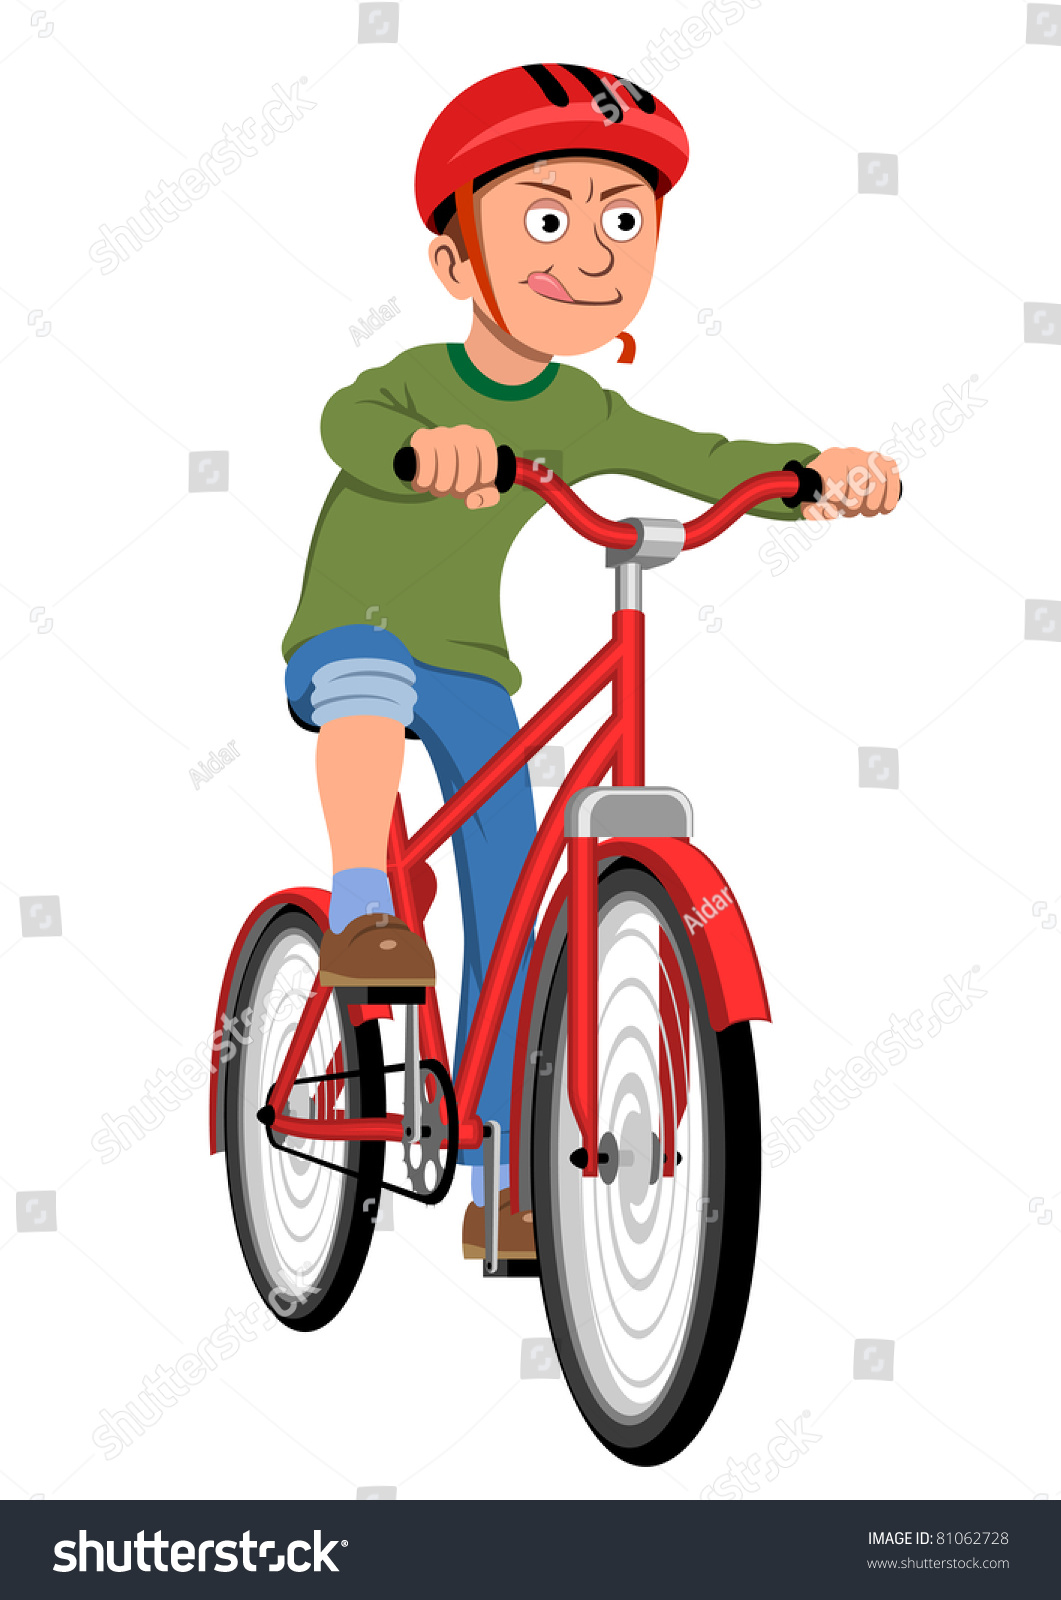 boy riding a bike clipart - photo #39